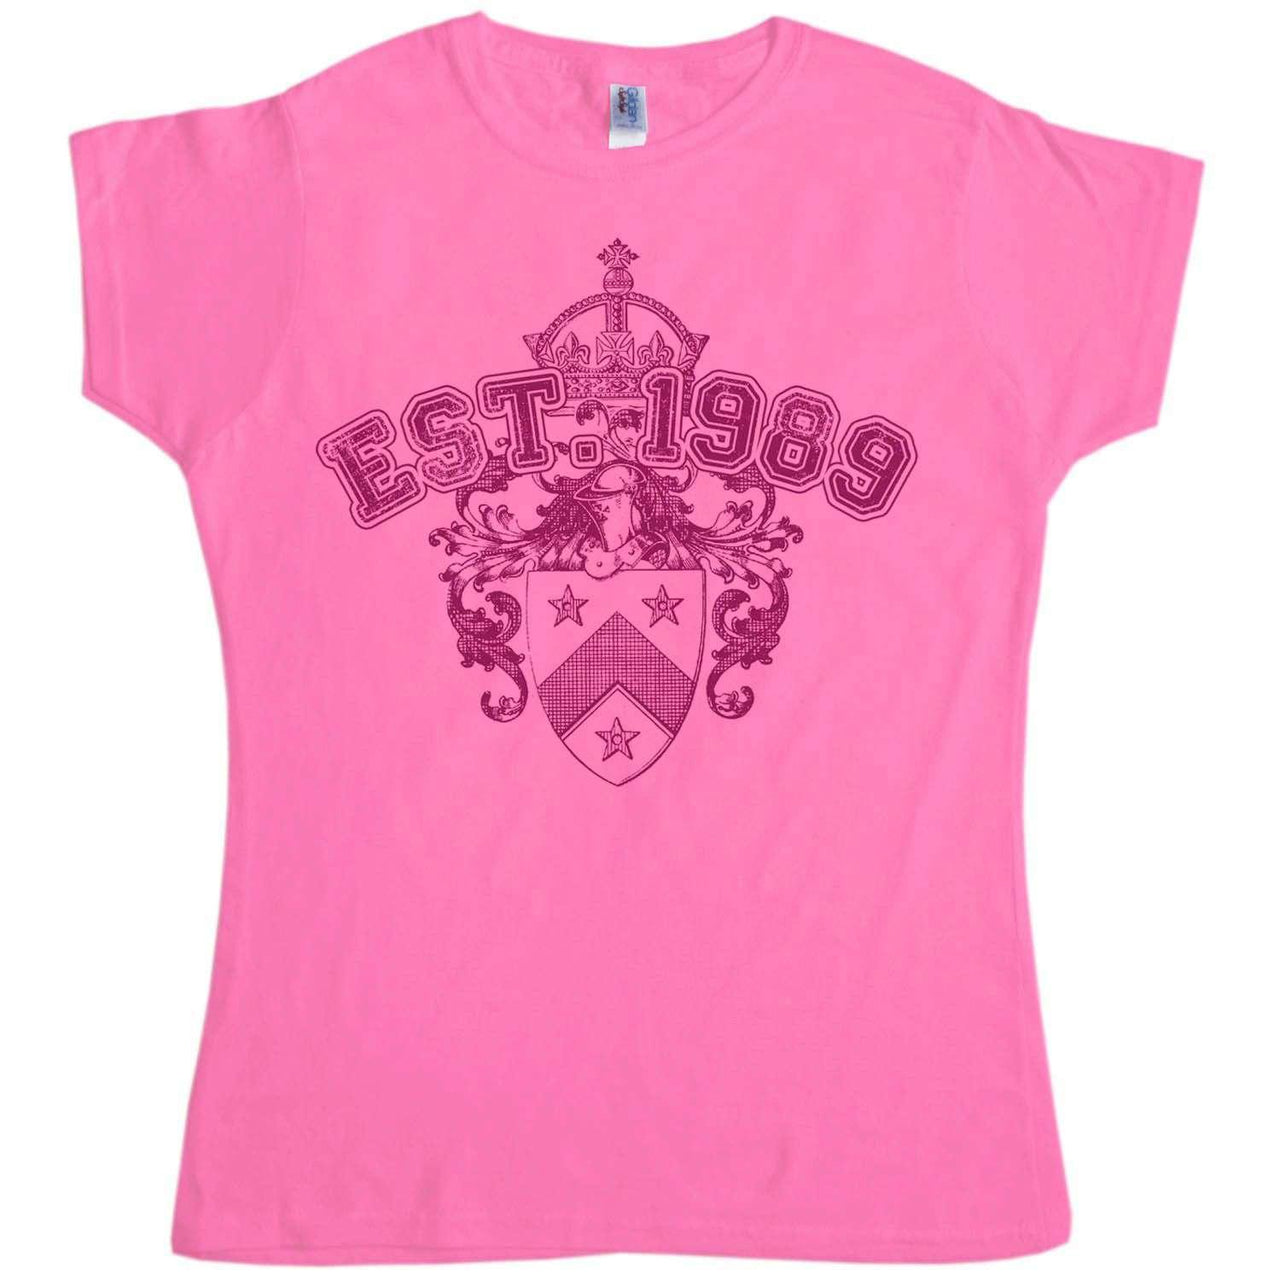 Est 1989 Fitted Womens T-Shirt 8Ball